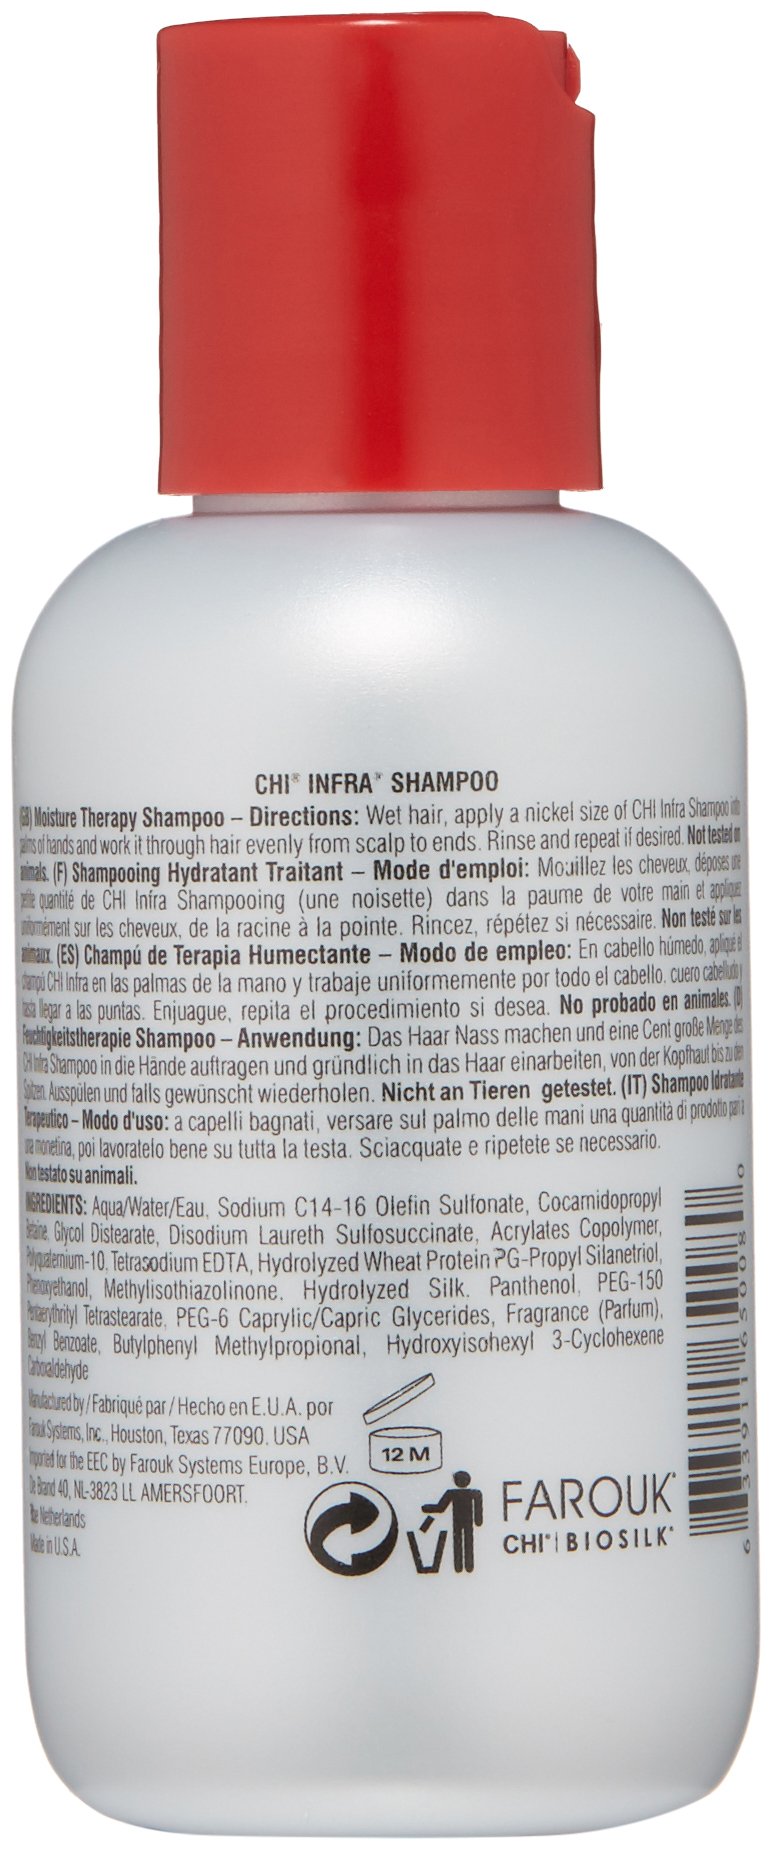 CHI Infra Shampoo, 2 Fl Oz